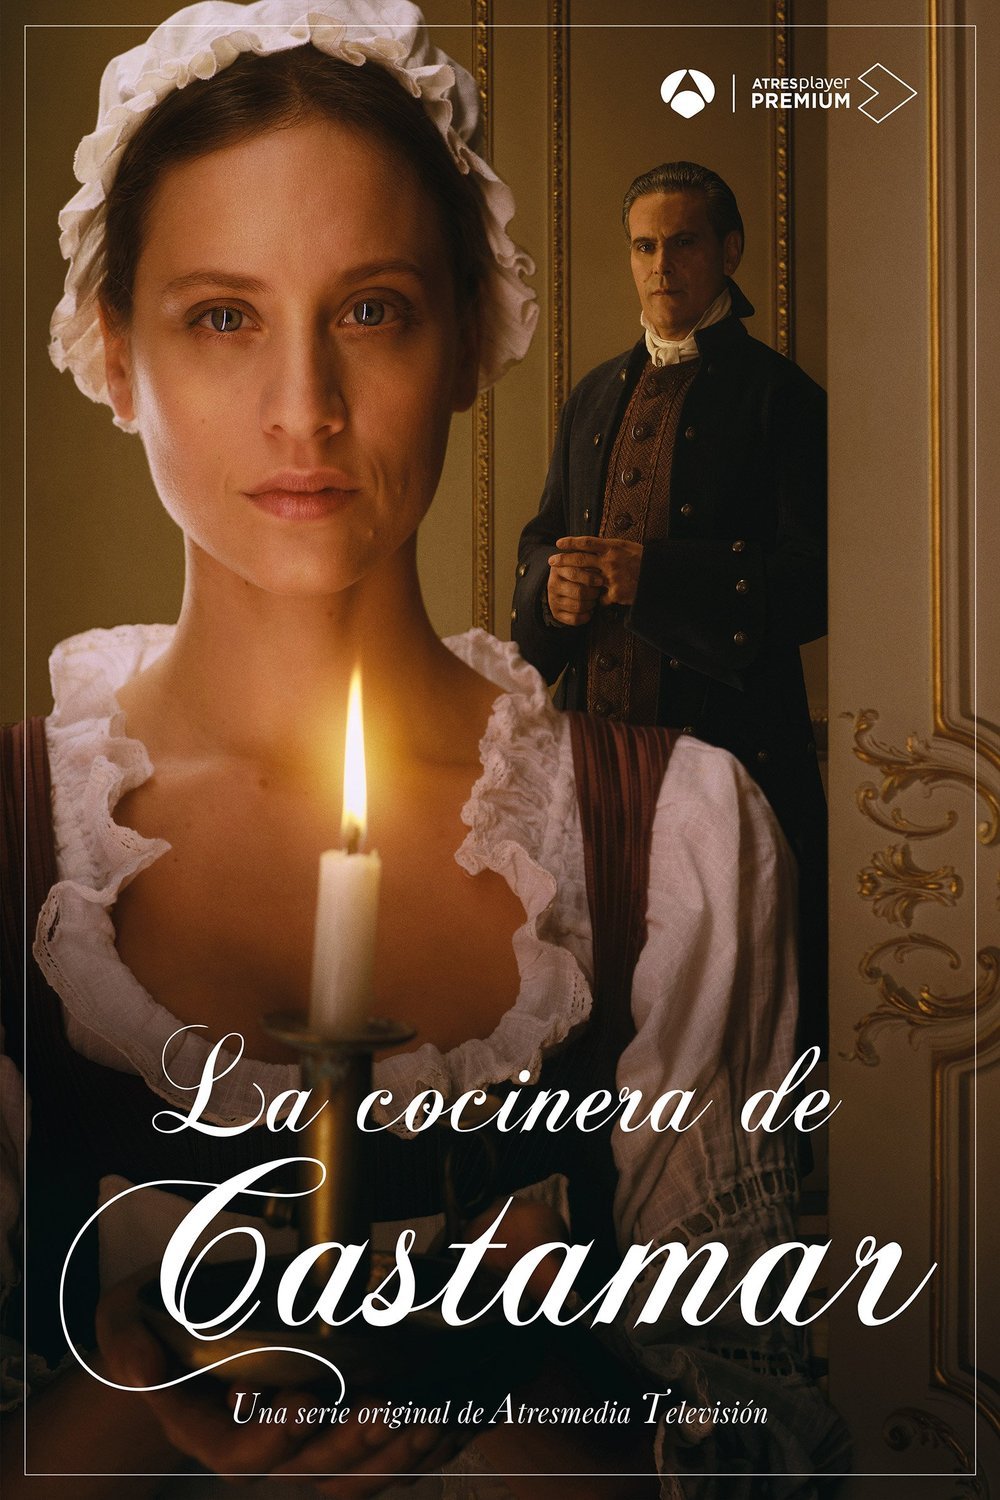 L'affiche originale du film La cocinera de Castamar en espagnol